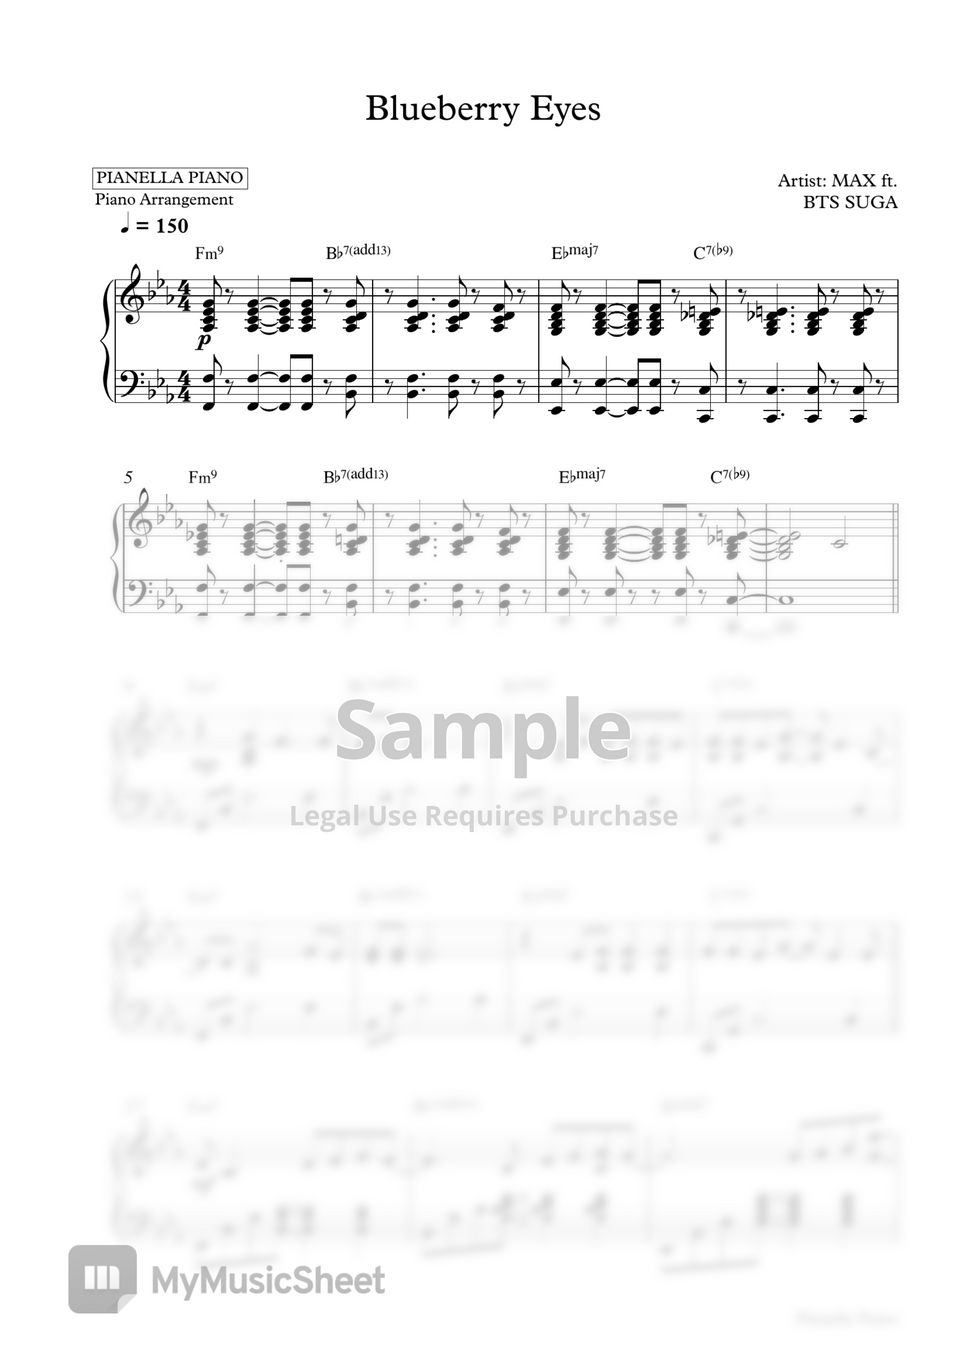 MAX ft. BTS SUGA - Blueberry Eyes (Piano Sheet) by Pianella Piano